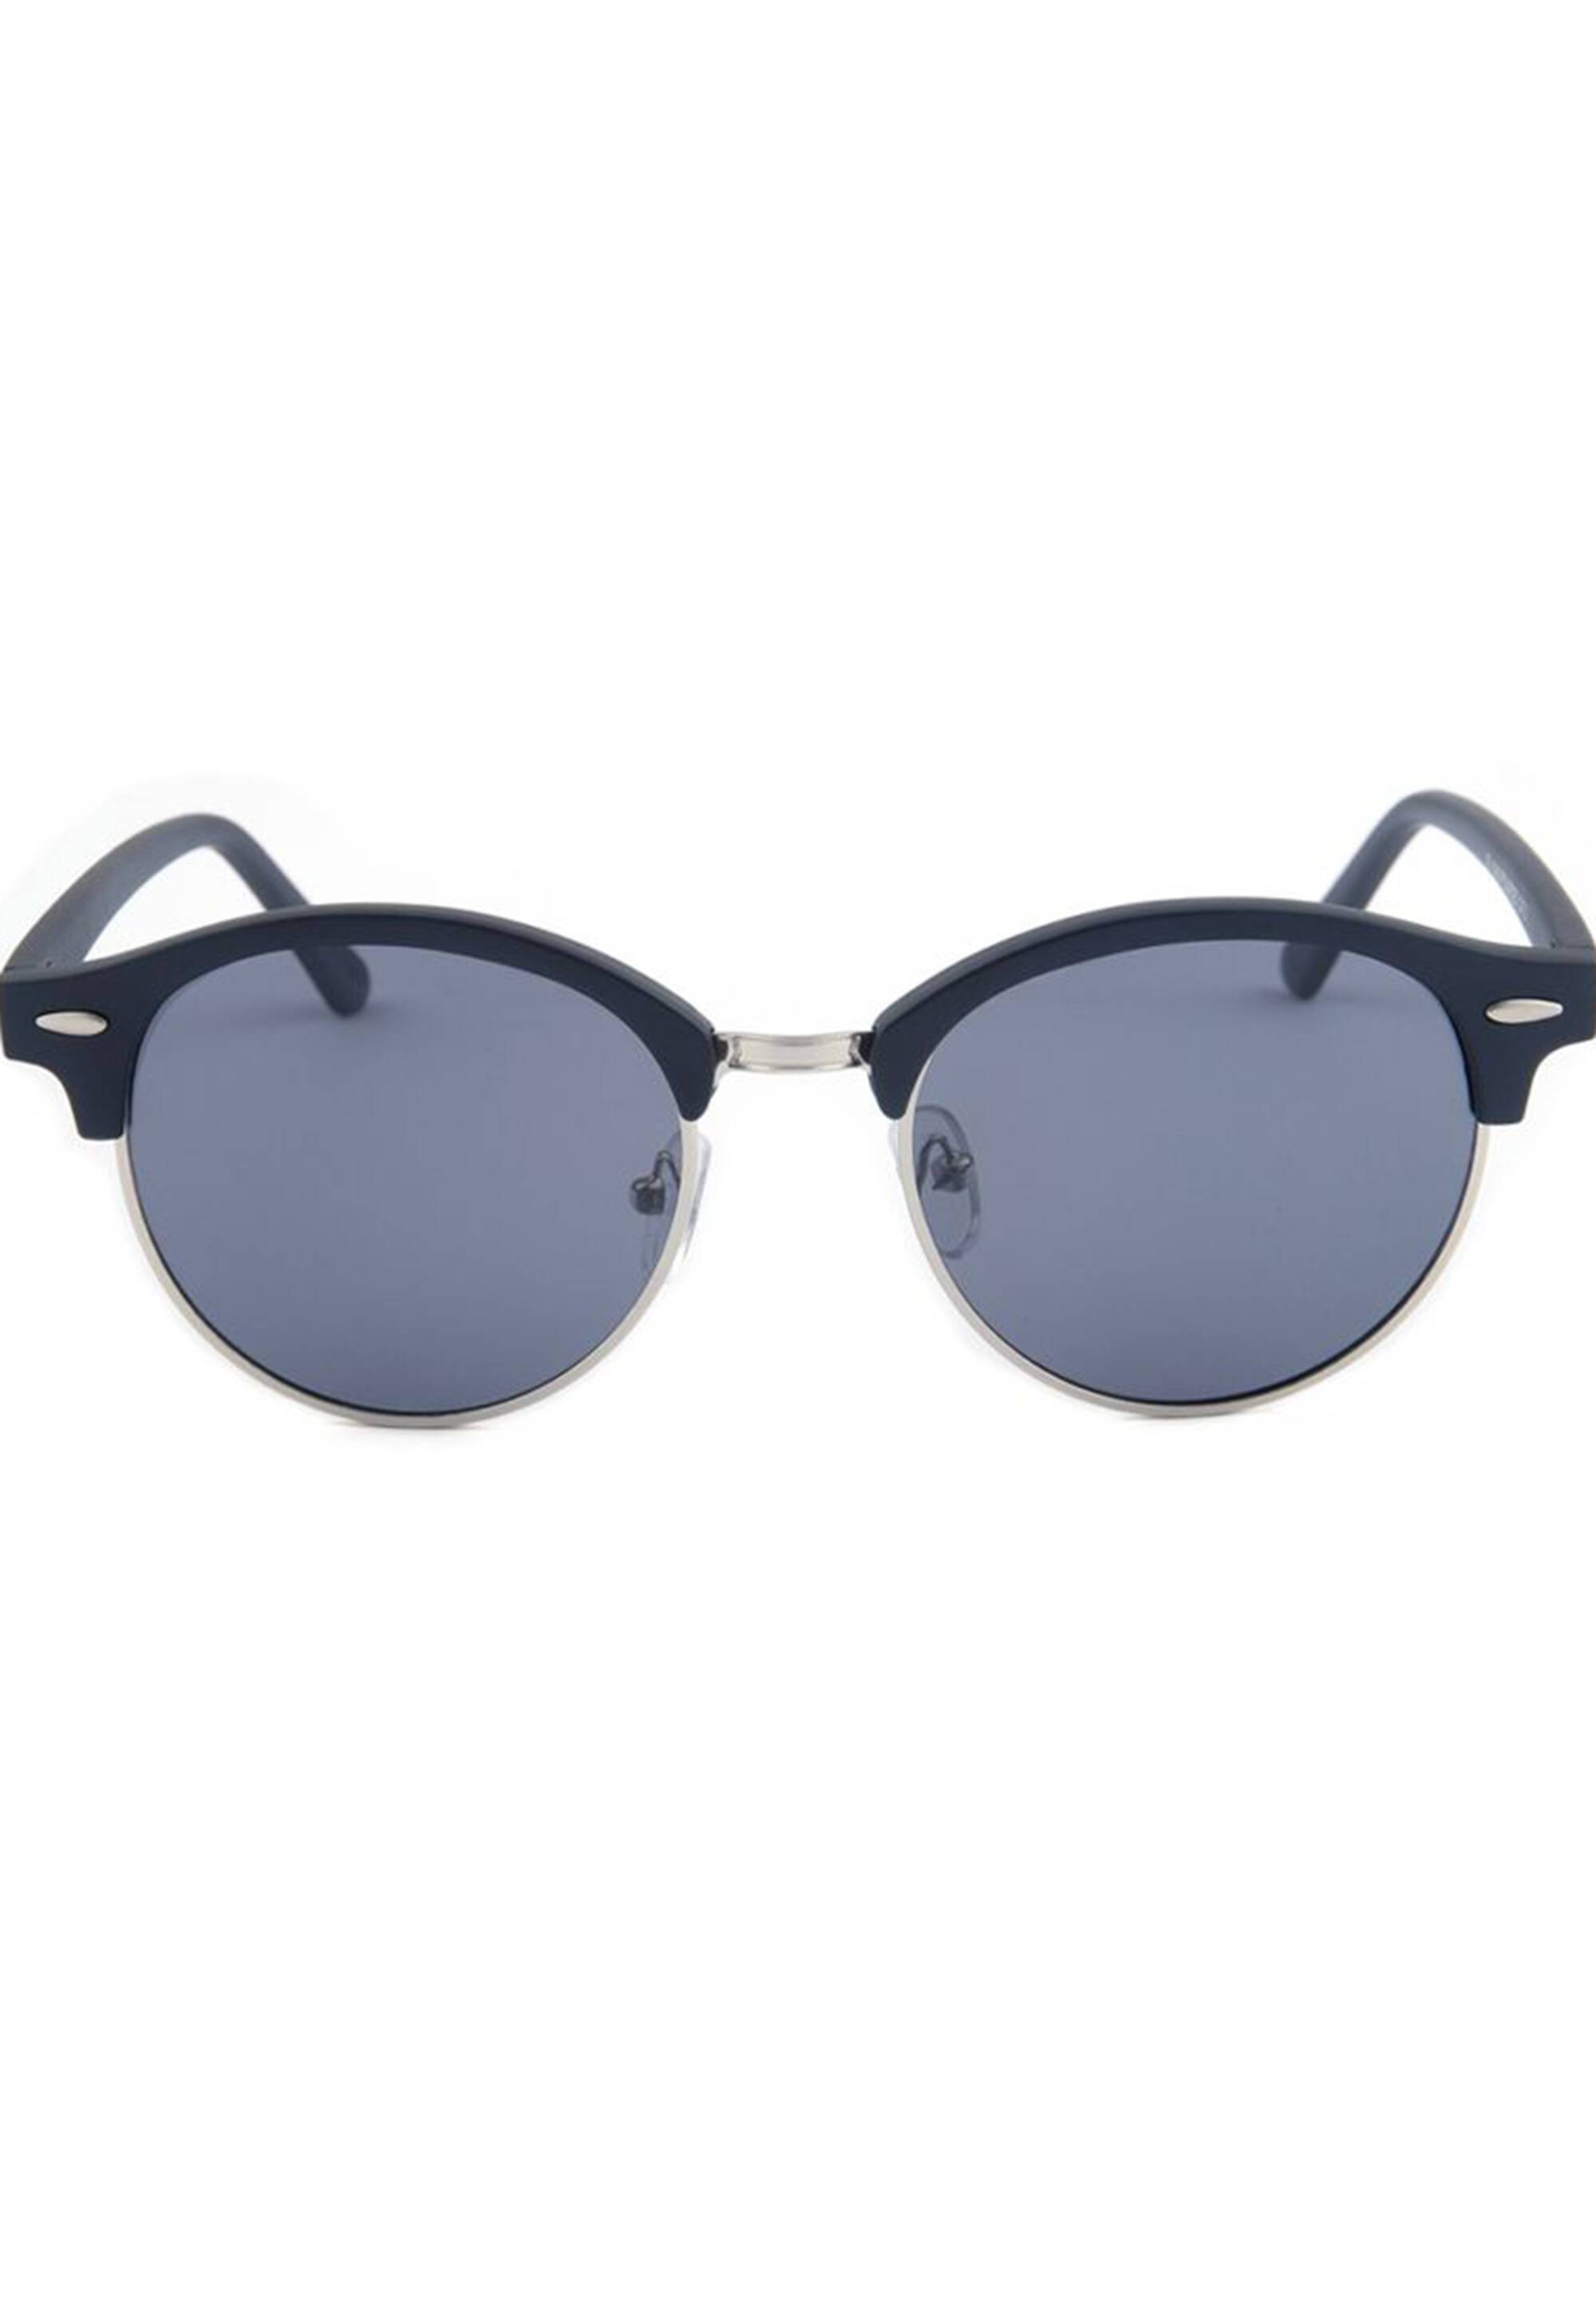 Clip On Sunglasses - Polarised Clip On Flip Up Sunglasses Fit Over Eyewear  | Fruugo NZ